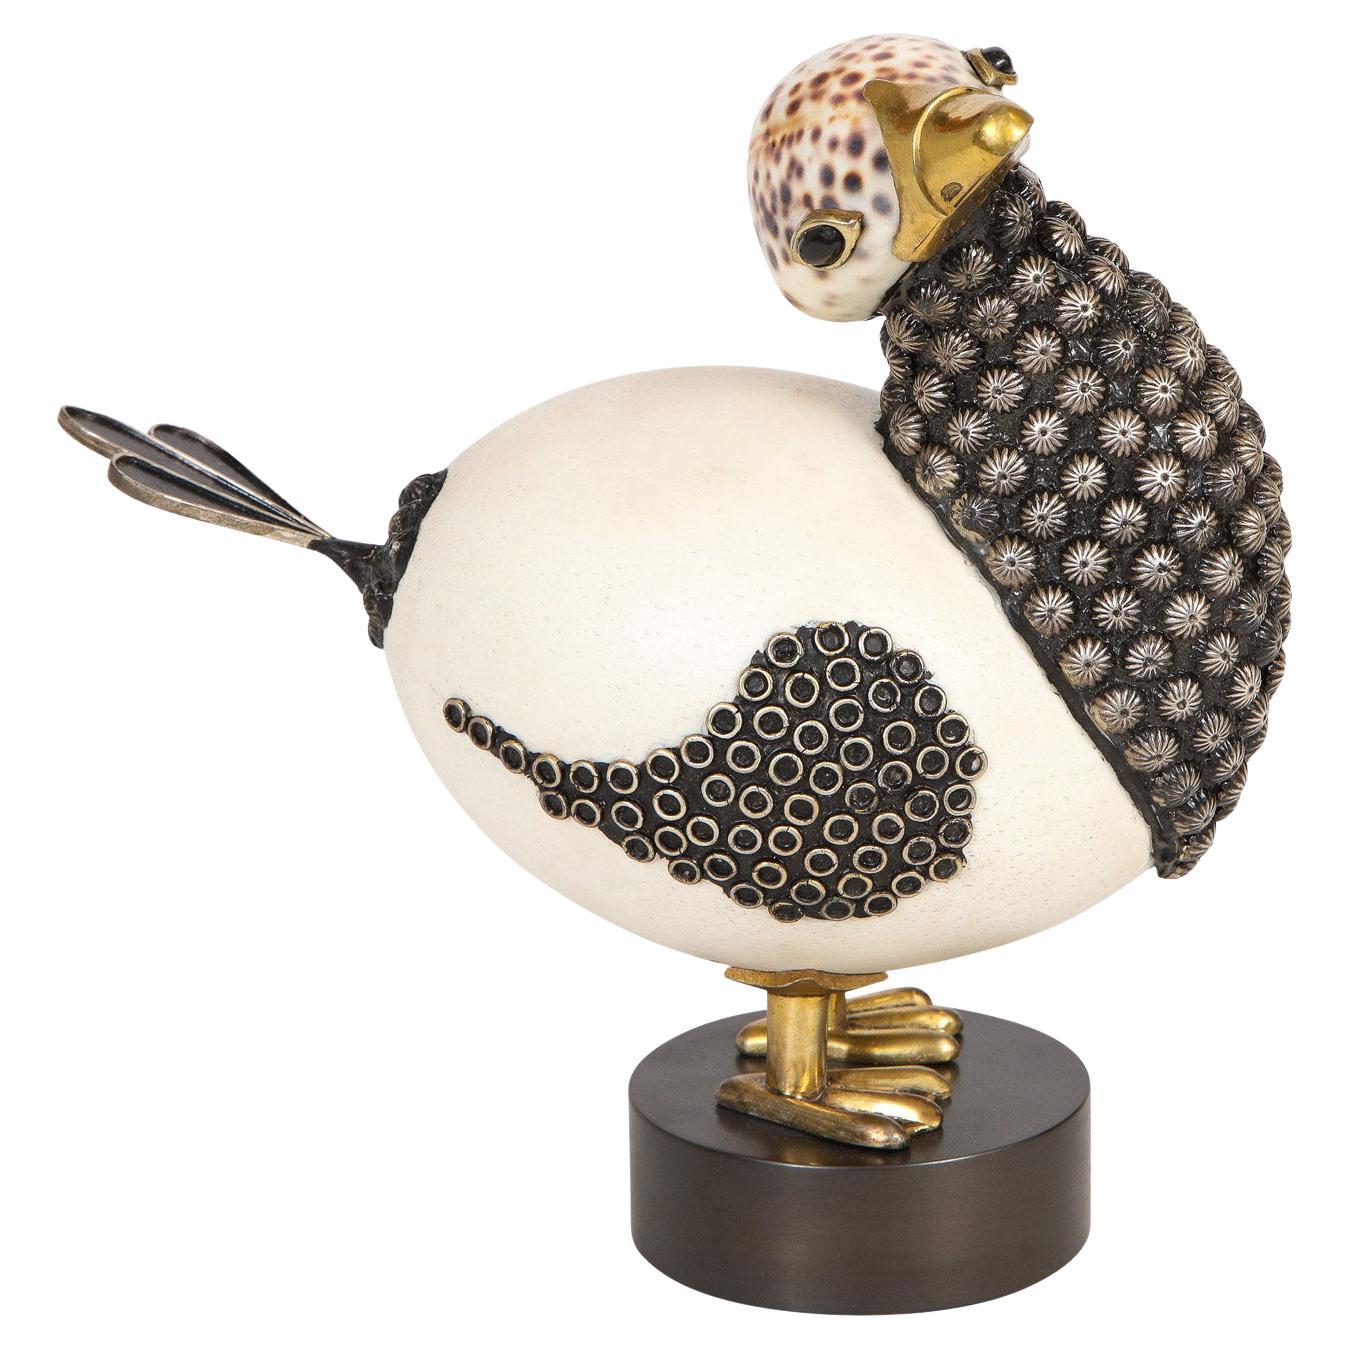 Roberto Estevez Ostrich Egg and Sea Shell Bird Sculpture 1968 (Signed)